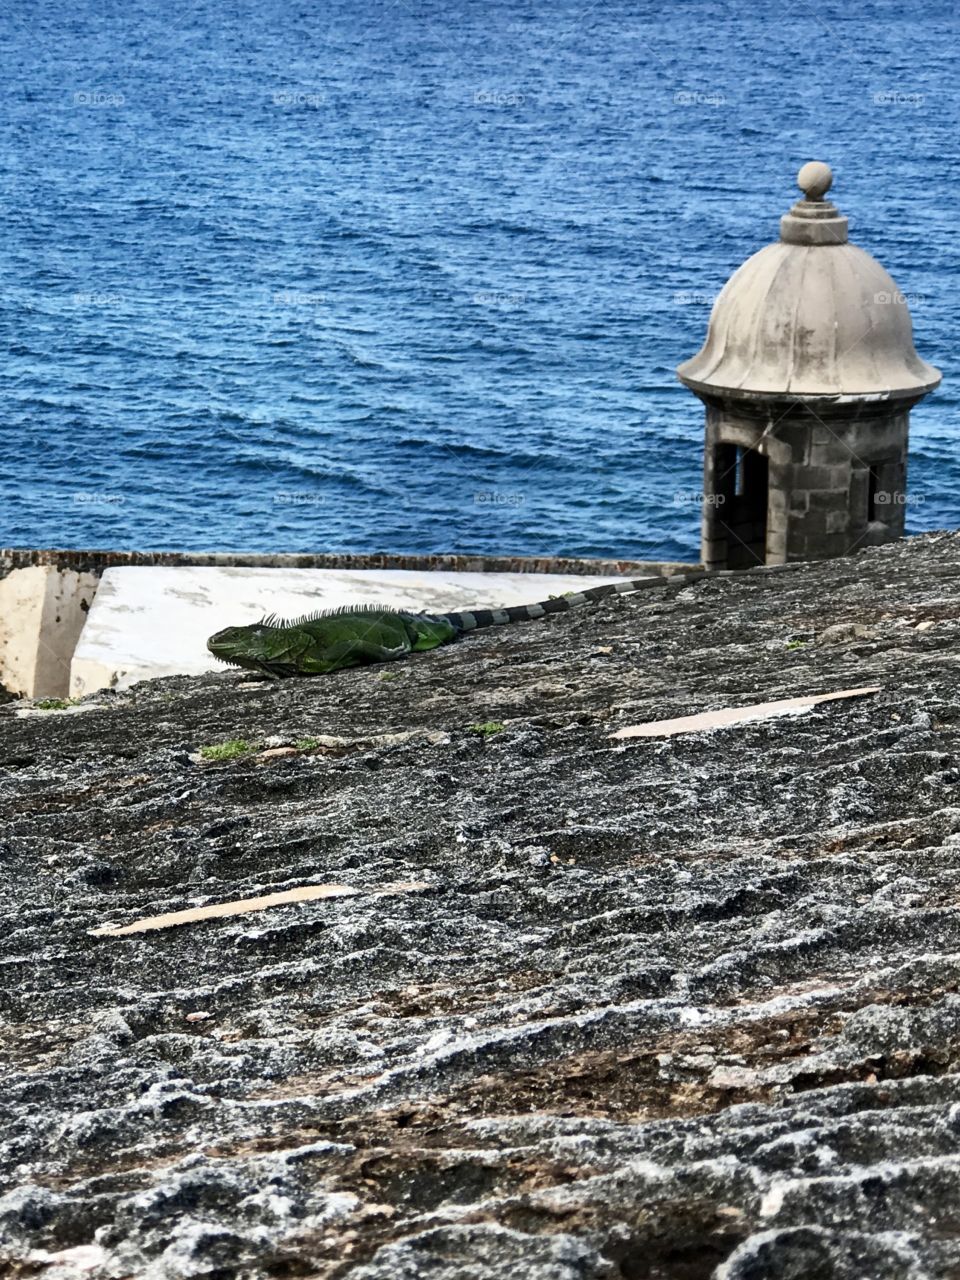 An iguana relaxing on the 16th-century Castillo San Felipe del Morro in Puerto Rico.